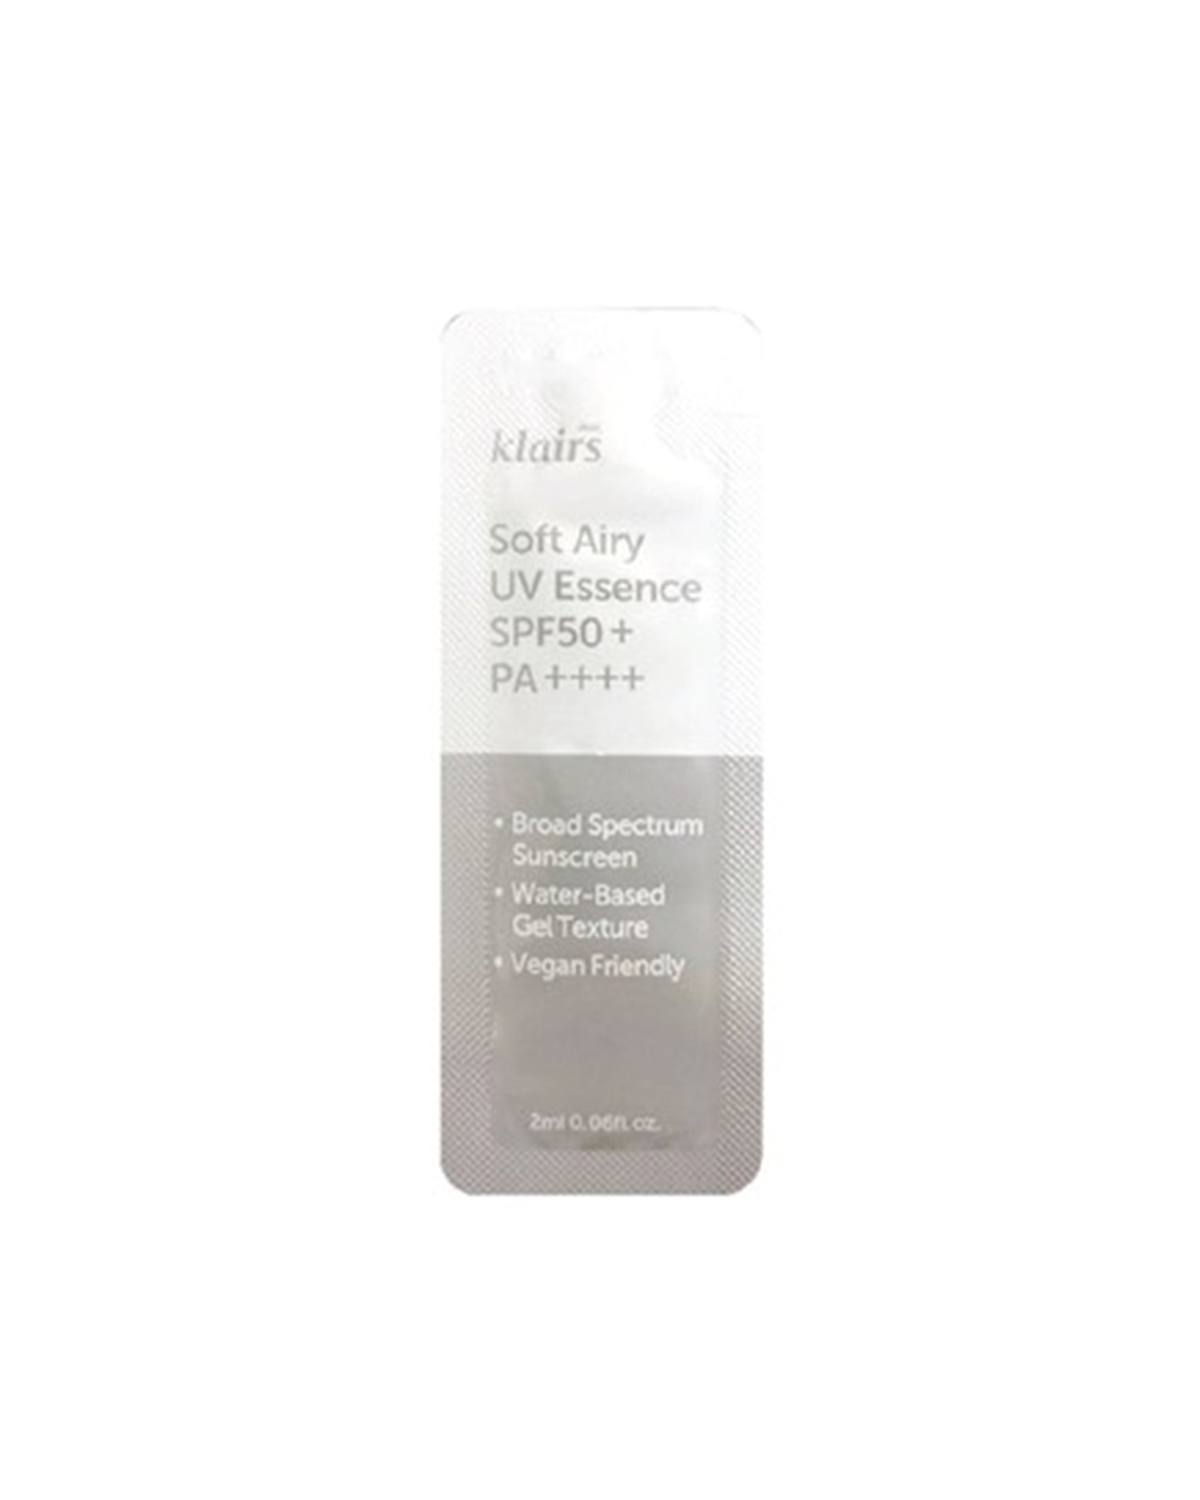 KLAIRS Soft Airy UV Essence SPF50+ PA++++ Sample 2 ml